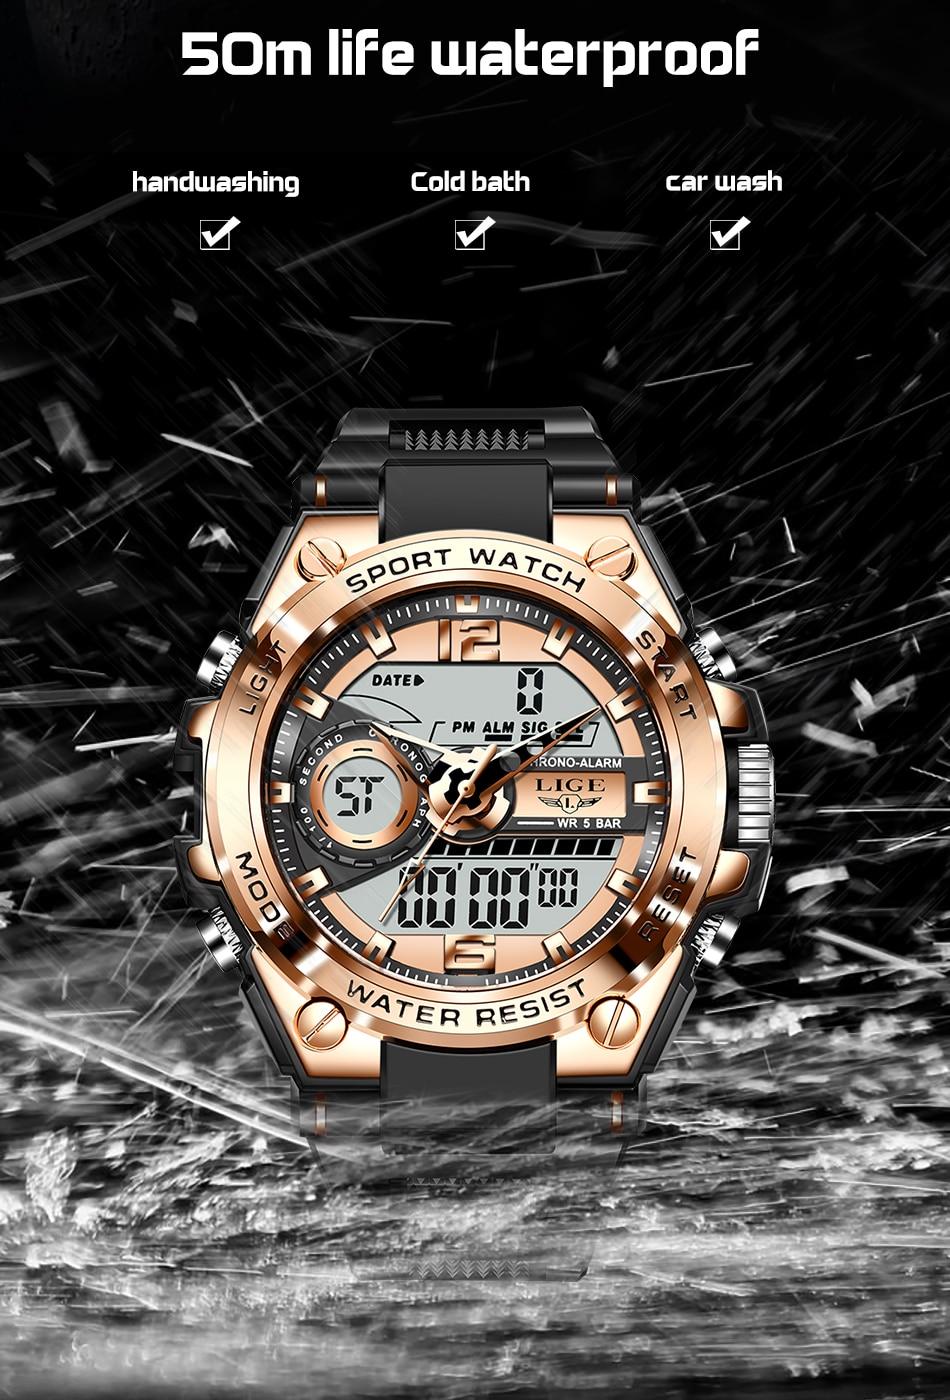 2021 LIGE Sport Men Quartz Digital Watch Creative Diving Watches Men Waterproof Alarm Watch Dual Display Clock Relogio Masculino